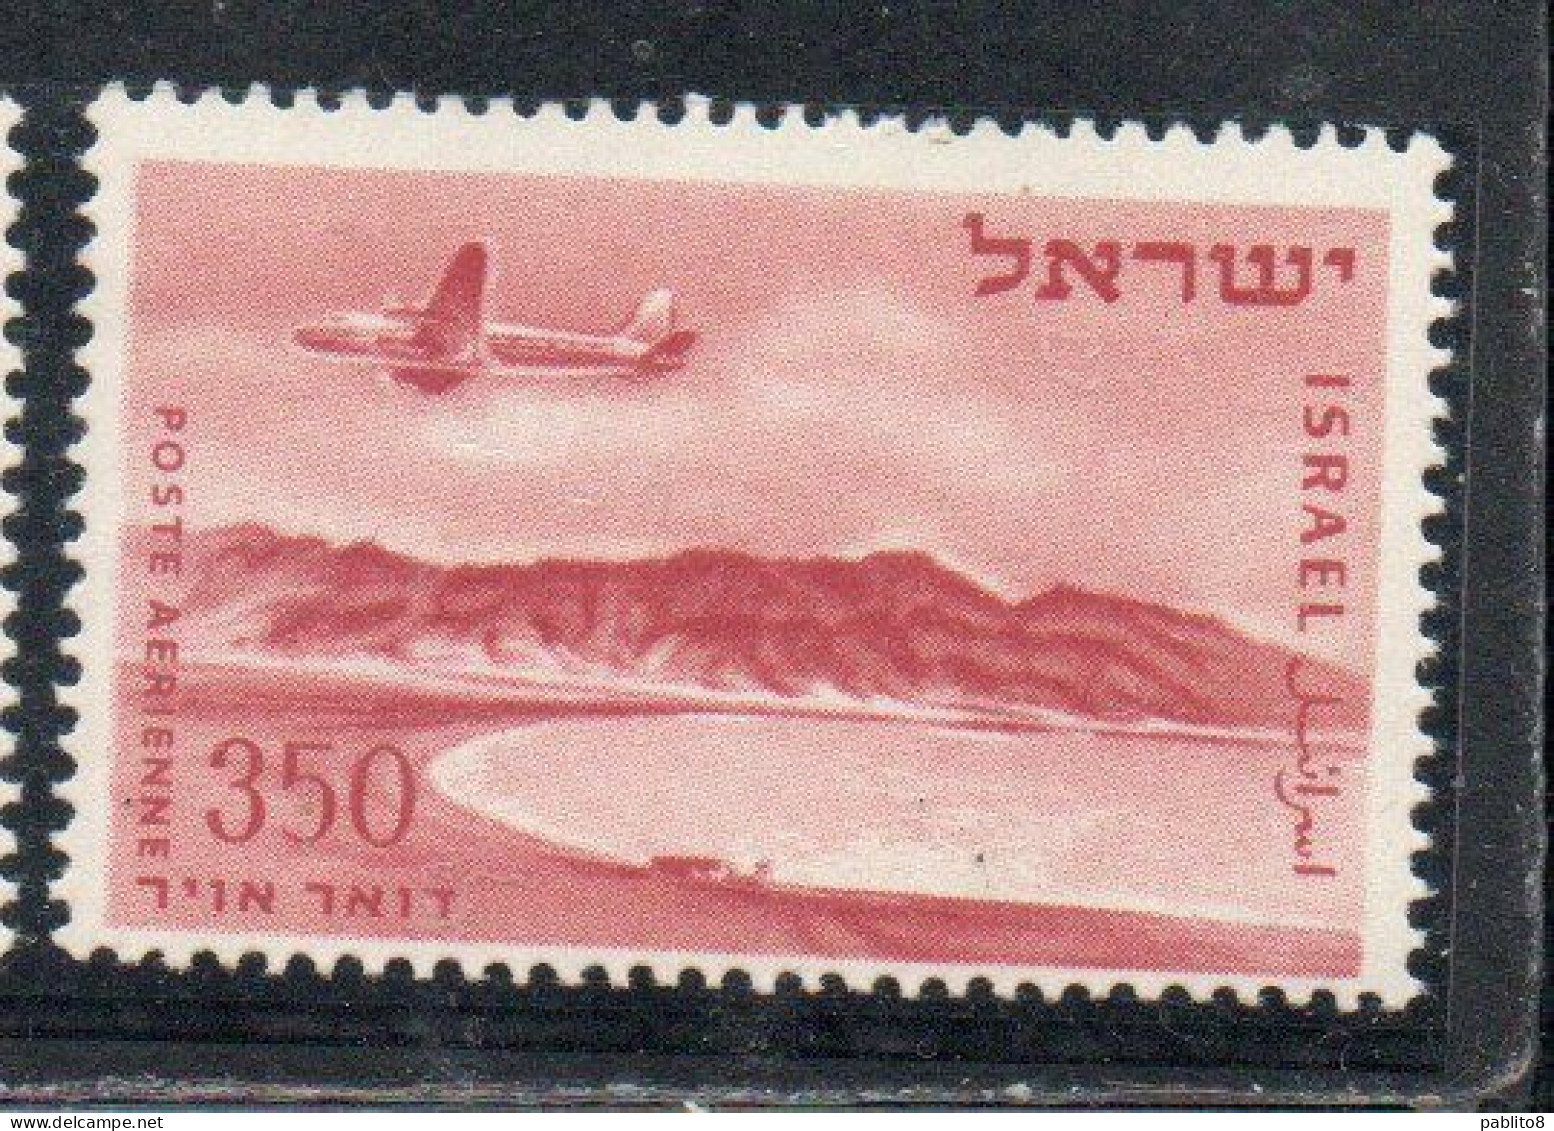 ISRAEL ISRAELE 1953 1956 AIRMAIL AIR POST MAIL BAY OF ELAT RED SEA 350p MNH - Airmail